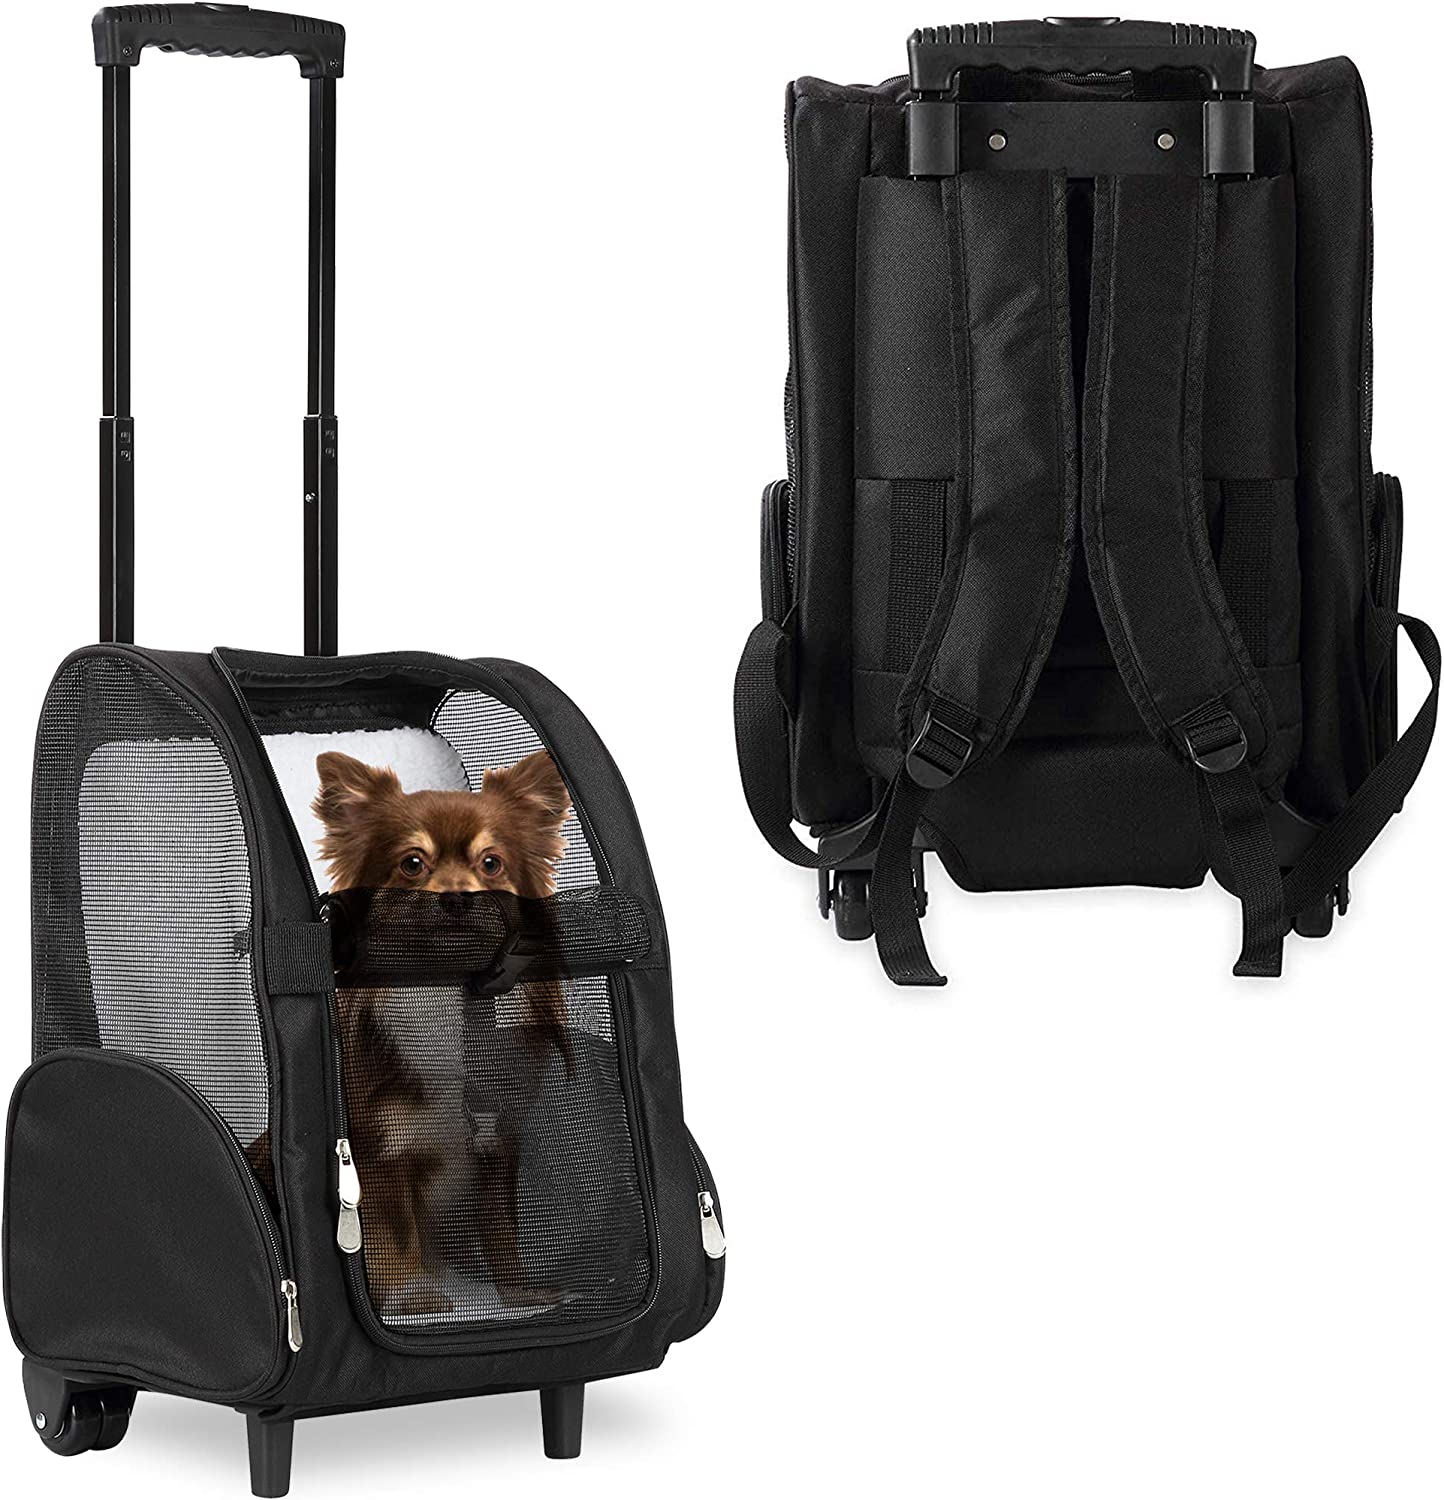 7. KOPEKS Deluxe Backpack Travel Carrier